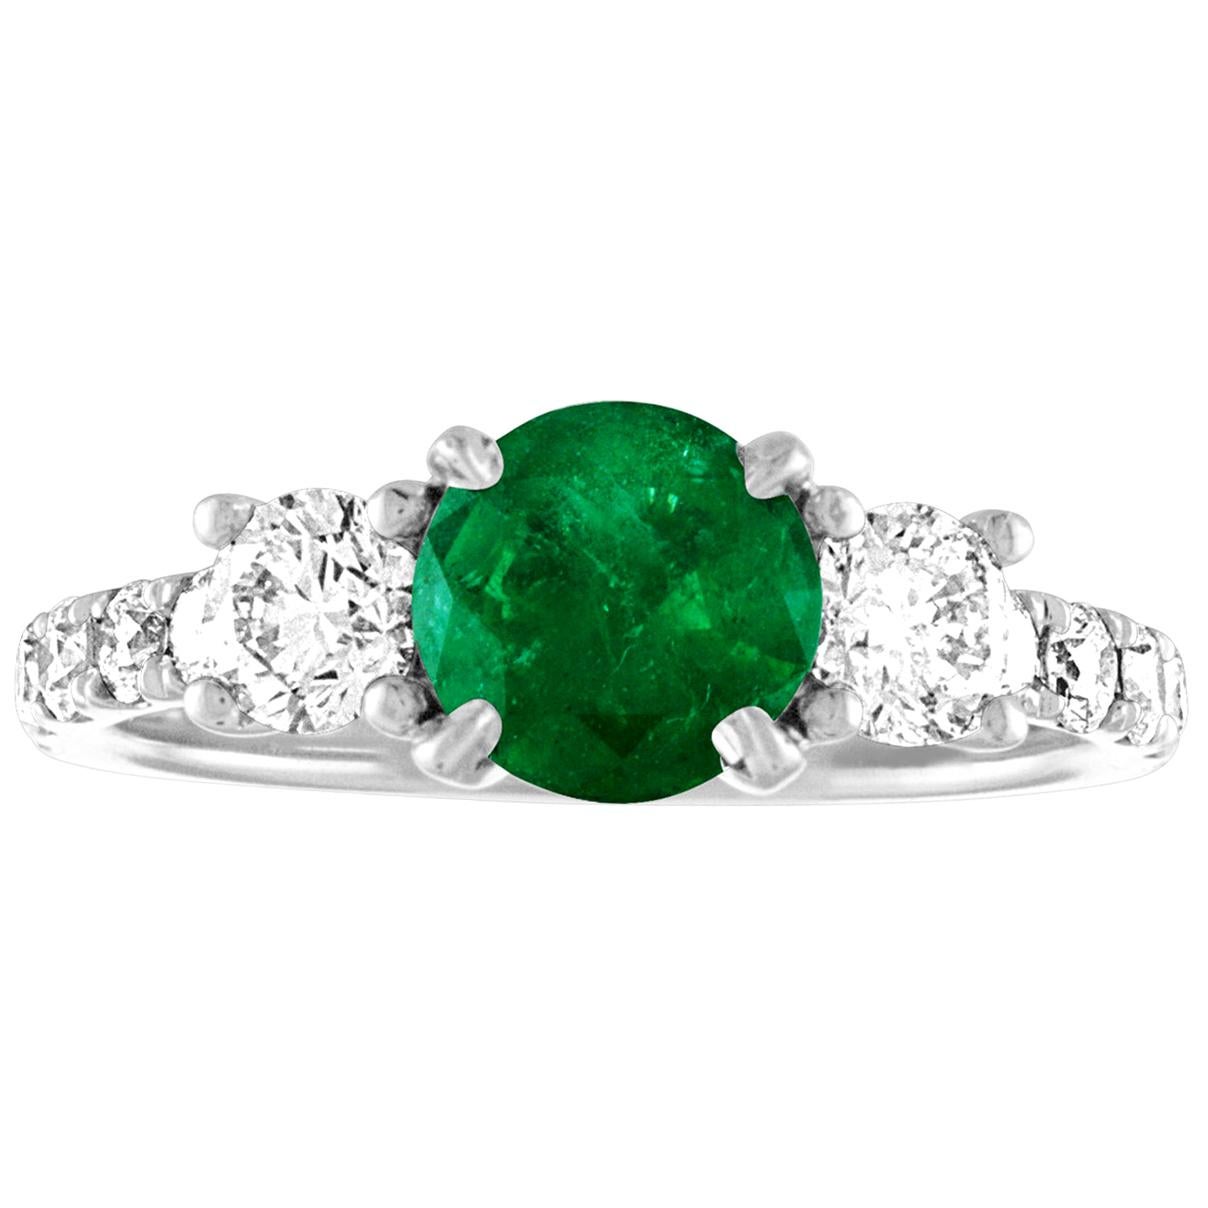 AGL Certified 0.77 Carat Emerald Three-Stone Diamond Gold Ring